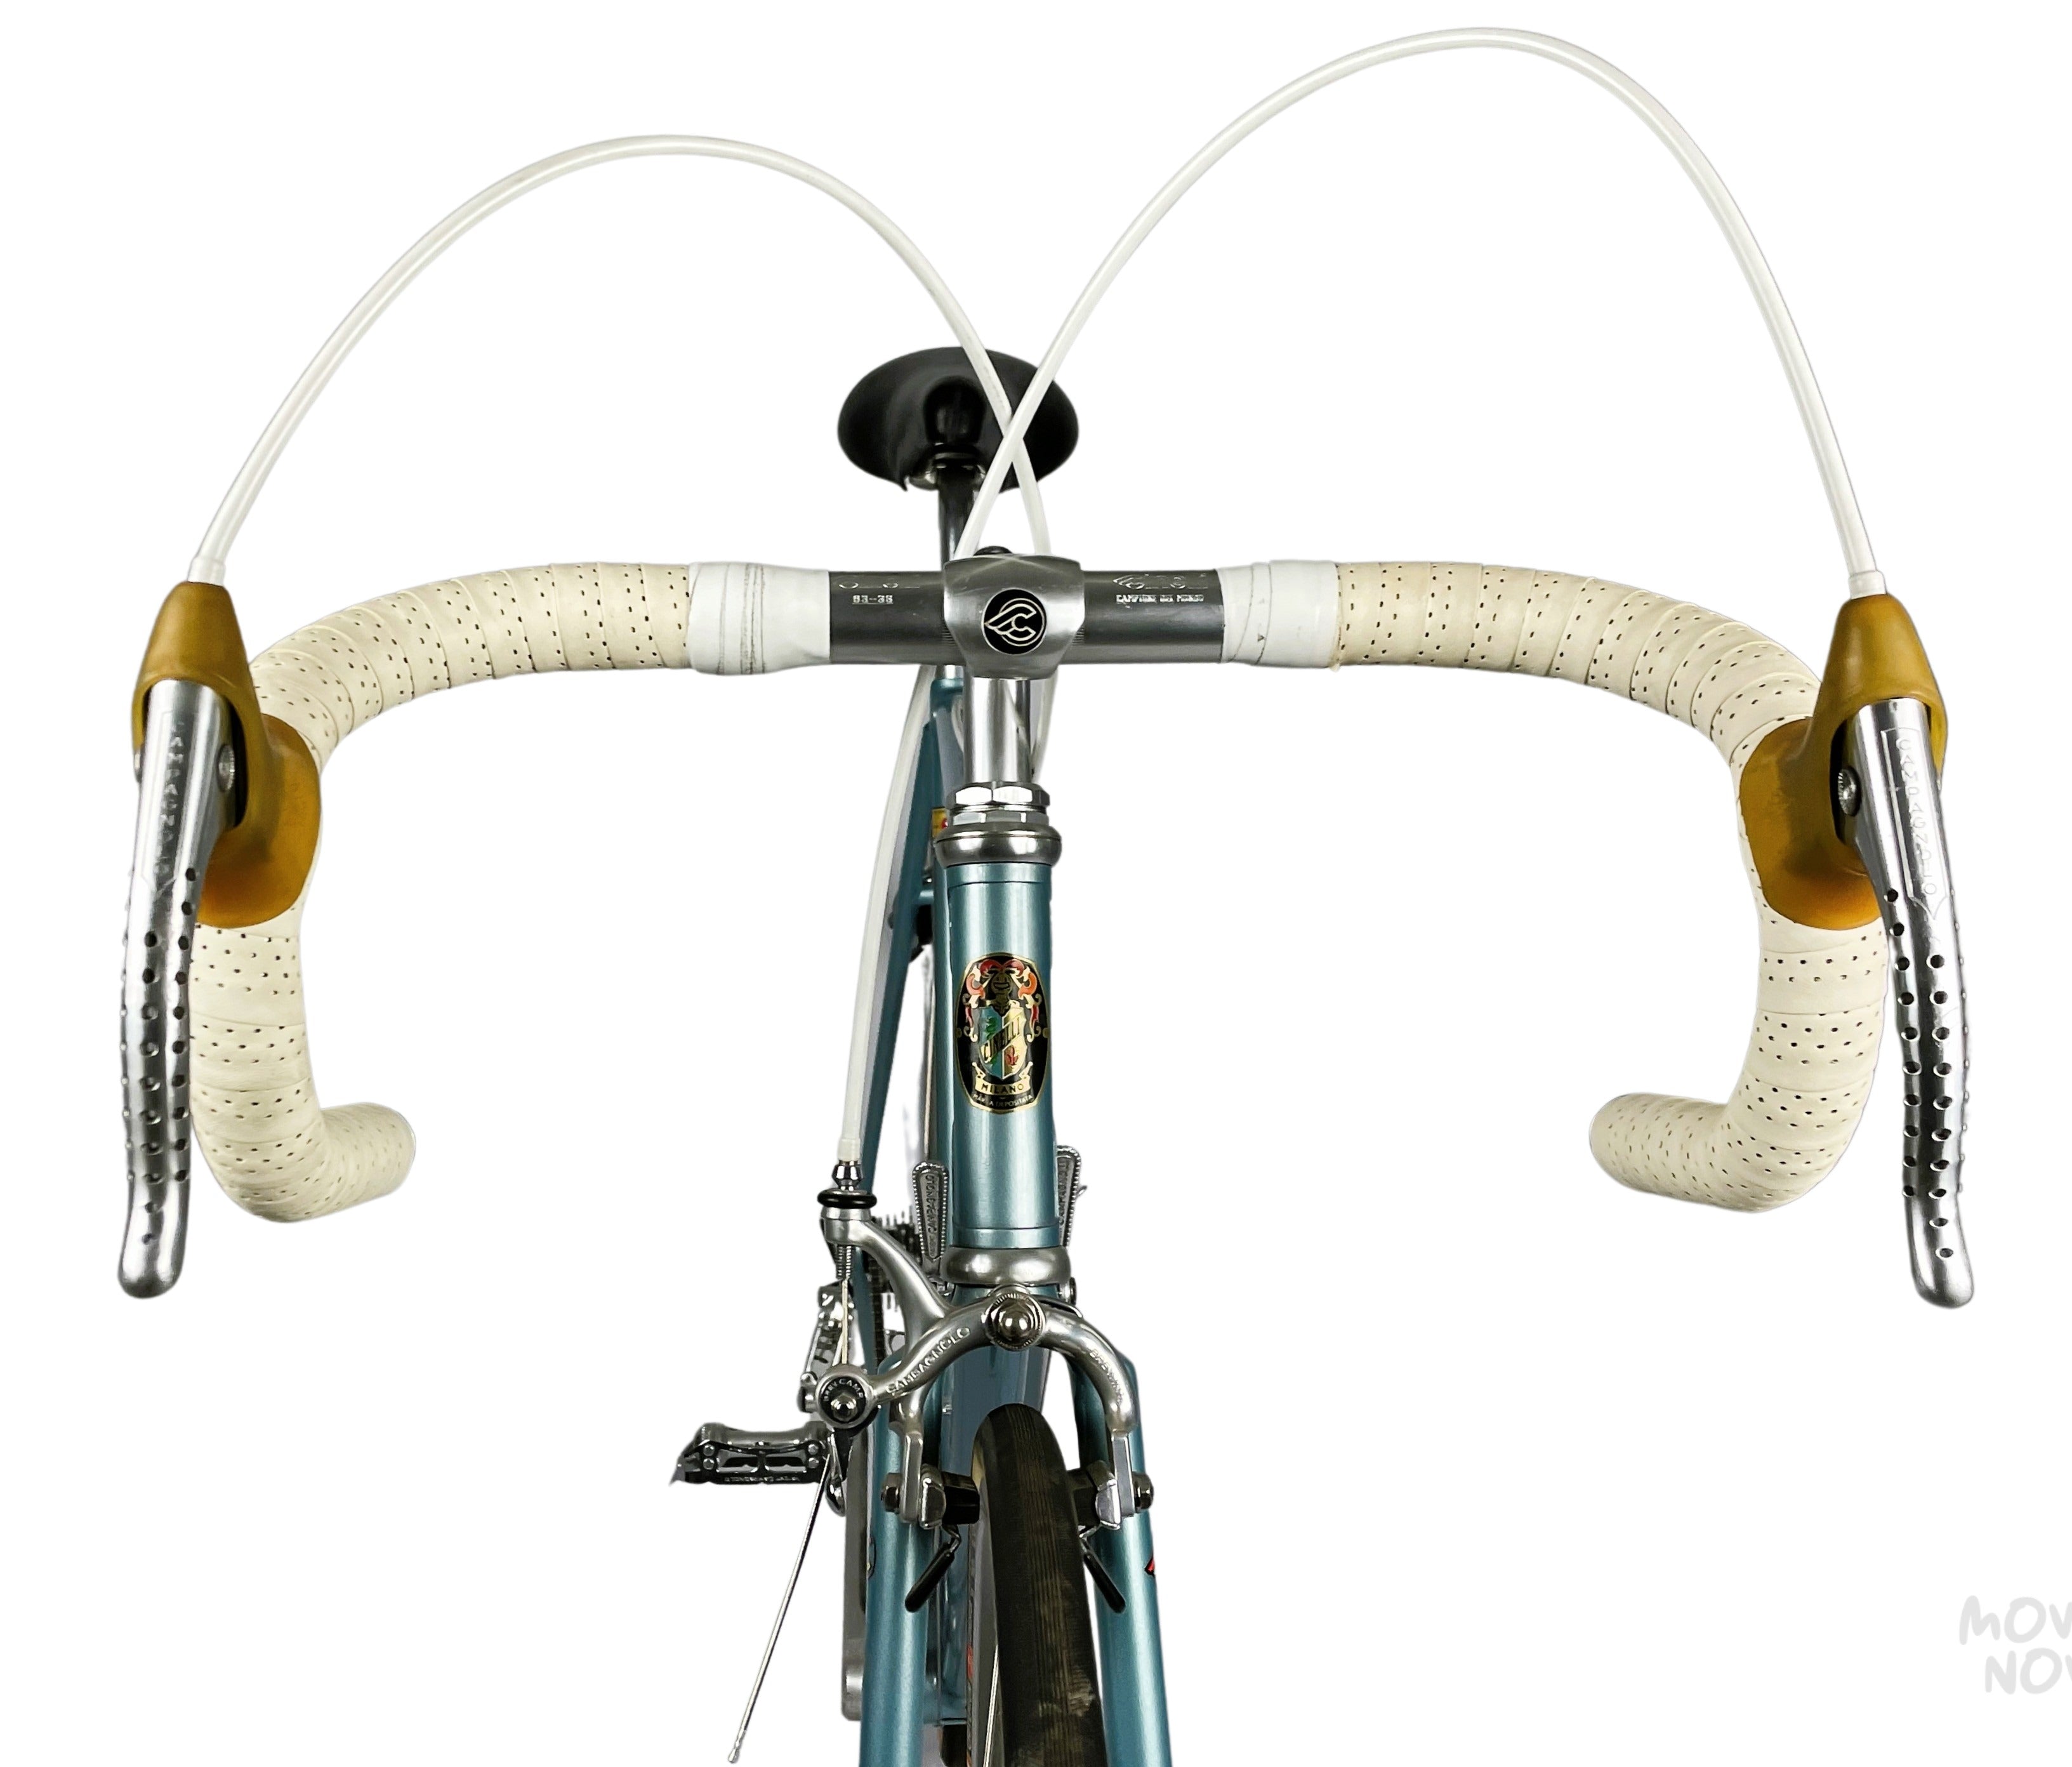 Cinelli Supercorsa 1970 - 56 - Bicycles